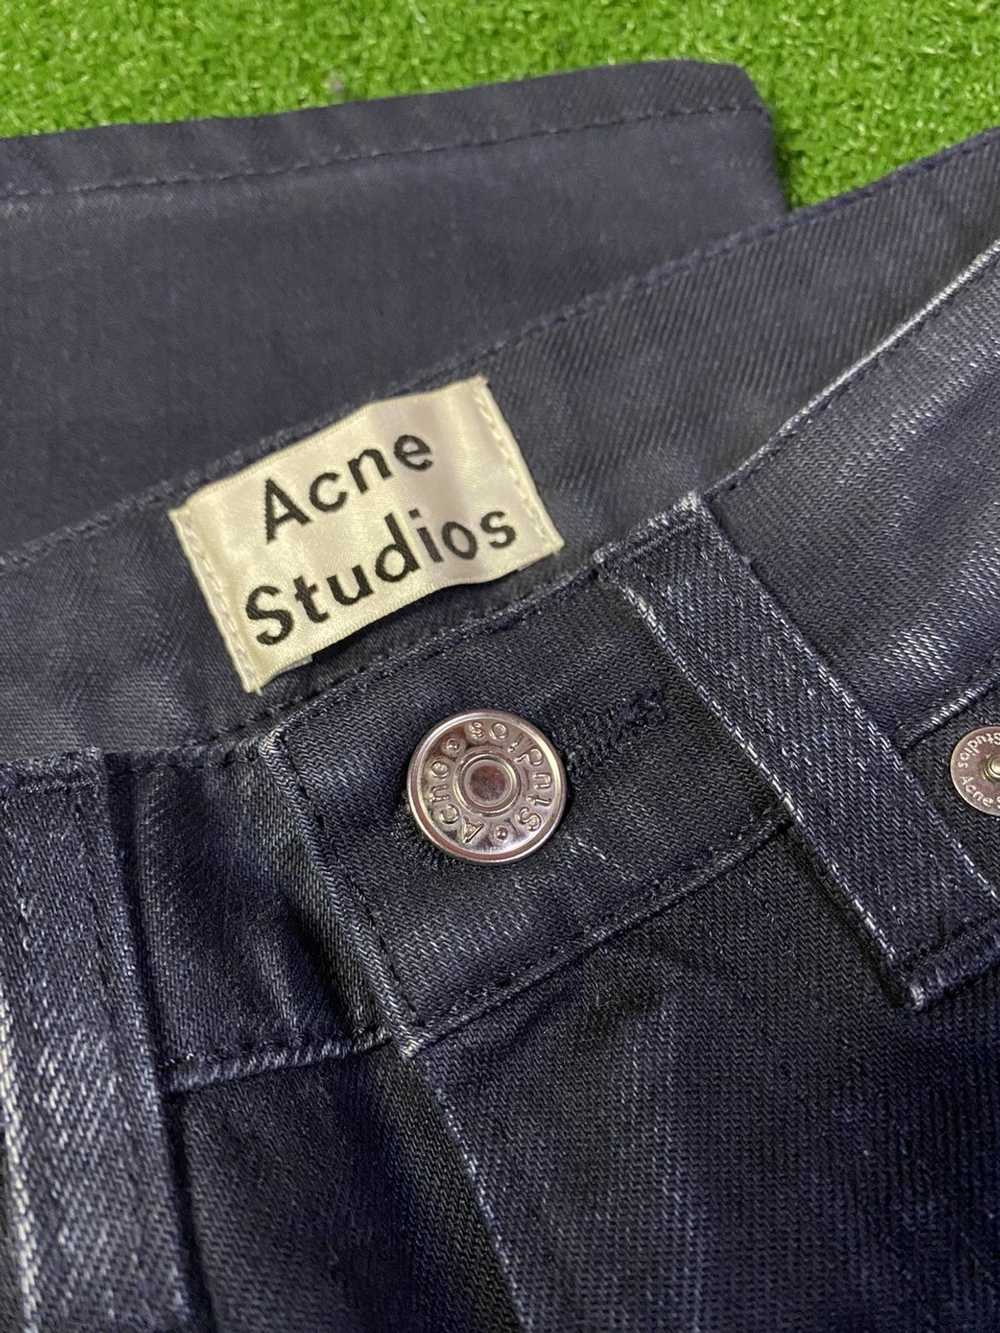 Acne Studios Acne Studios Twilight Patti Jeans - image 7